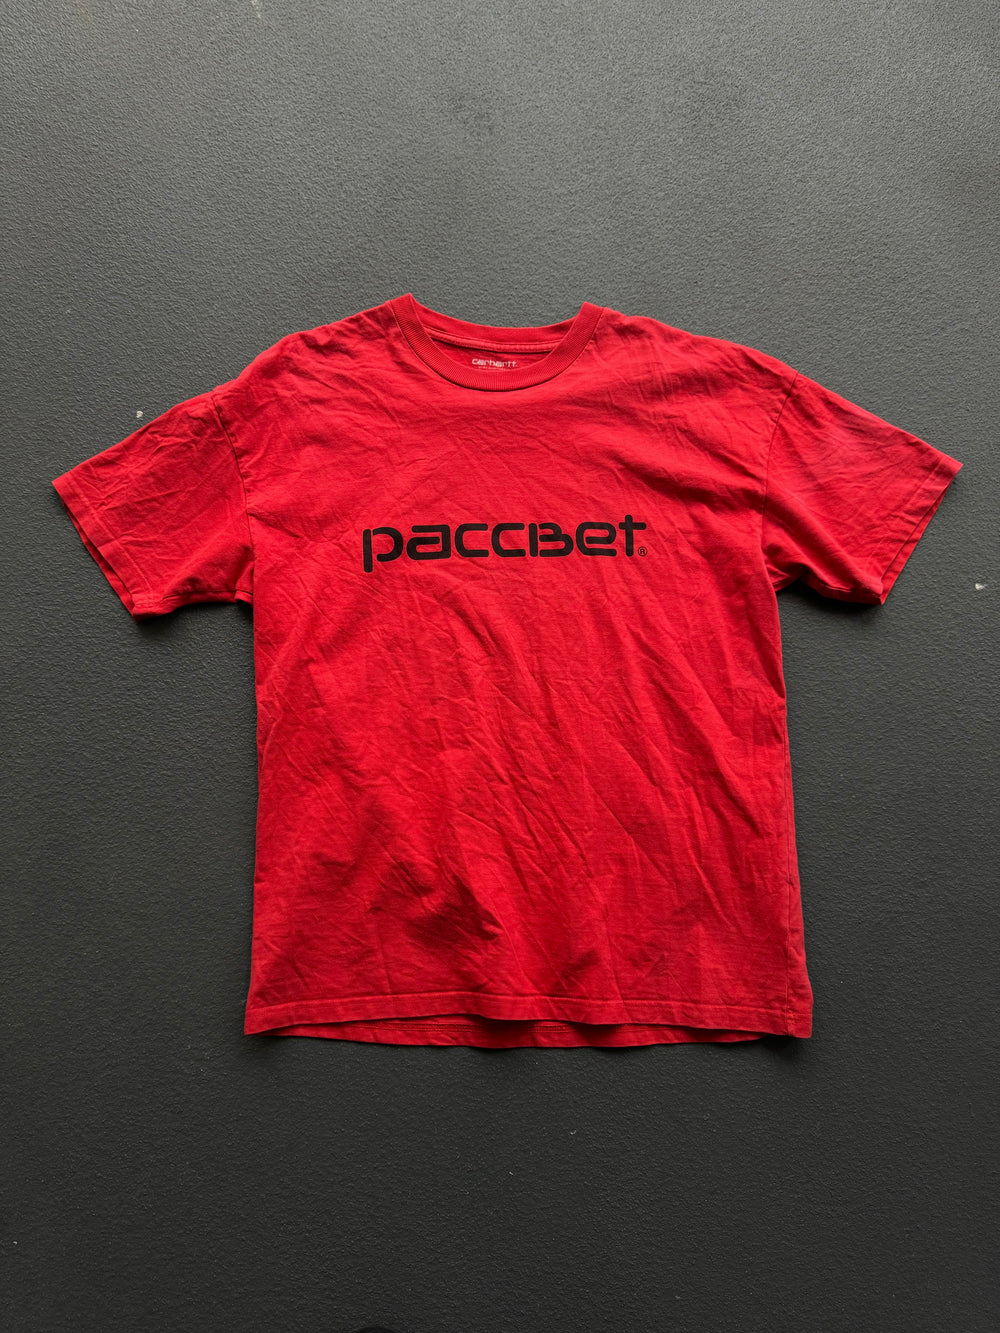 Carhartt Gosha Rubchinsky Paccbet Rassvet Logo T-Shirt (M)